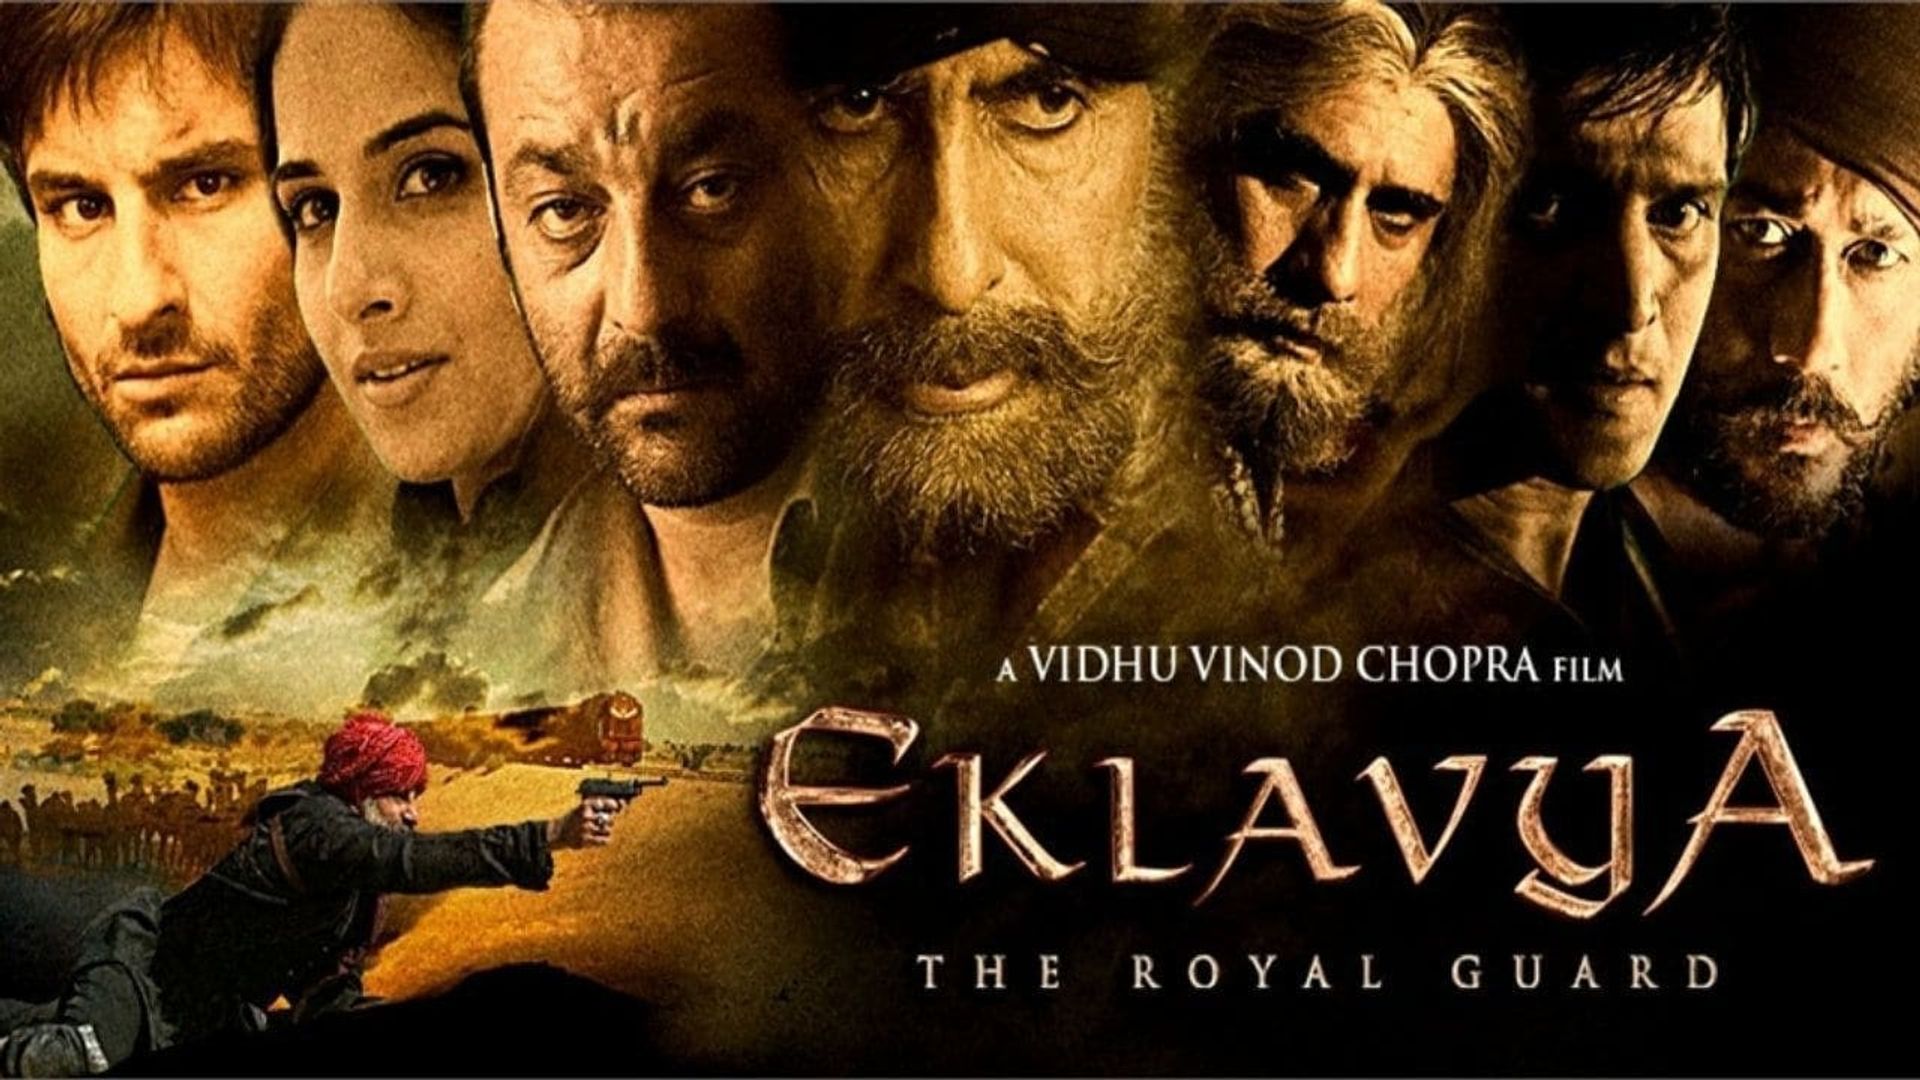 Eklavya: The Royal Guard background